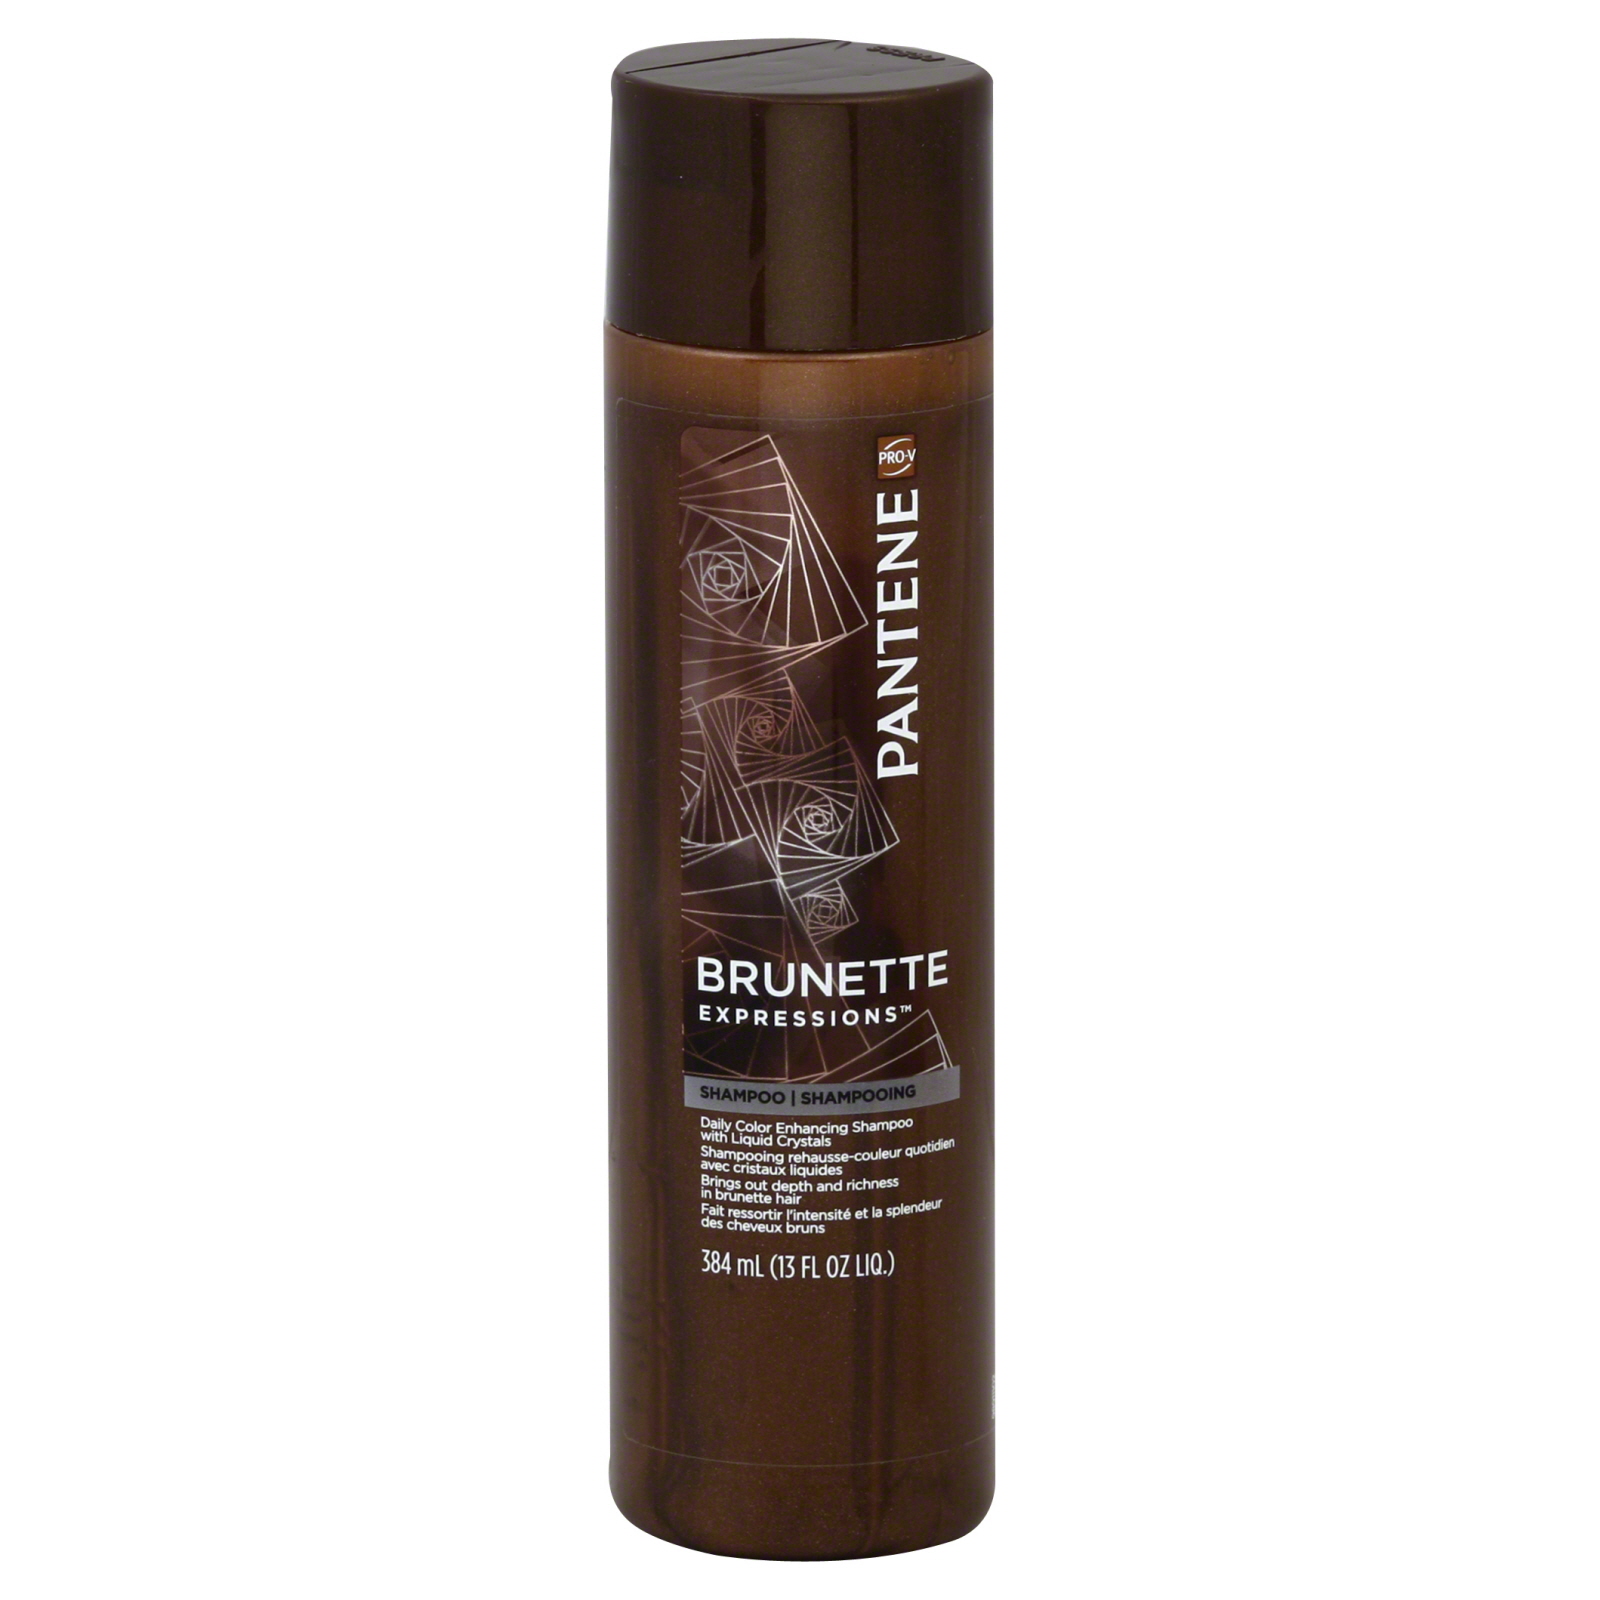 Pantene Pro-V Brunette Expressions Shampoo, Daily Color Enhancing, 13 fl oz (384 ml)